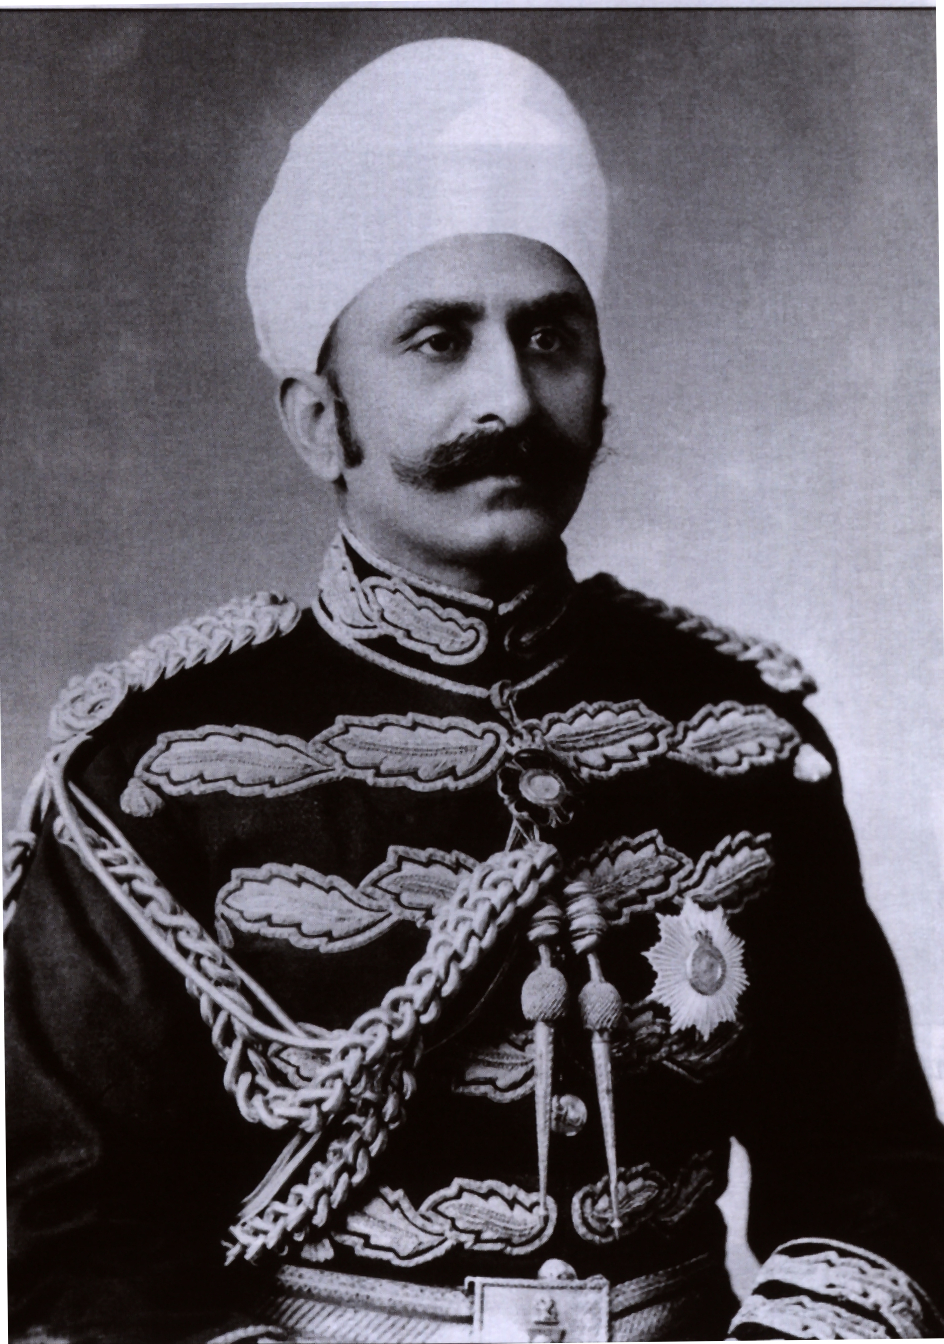 sultan